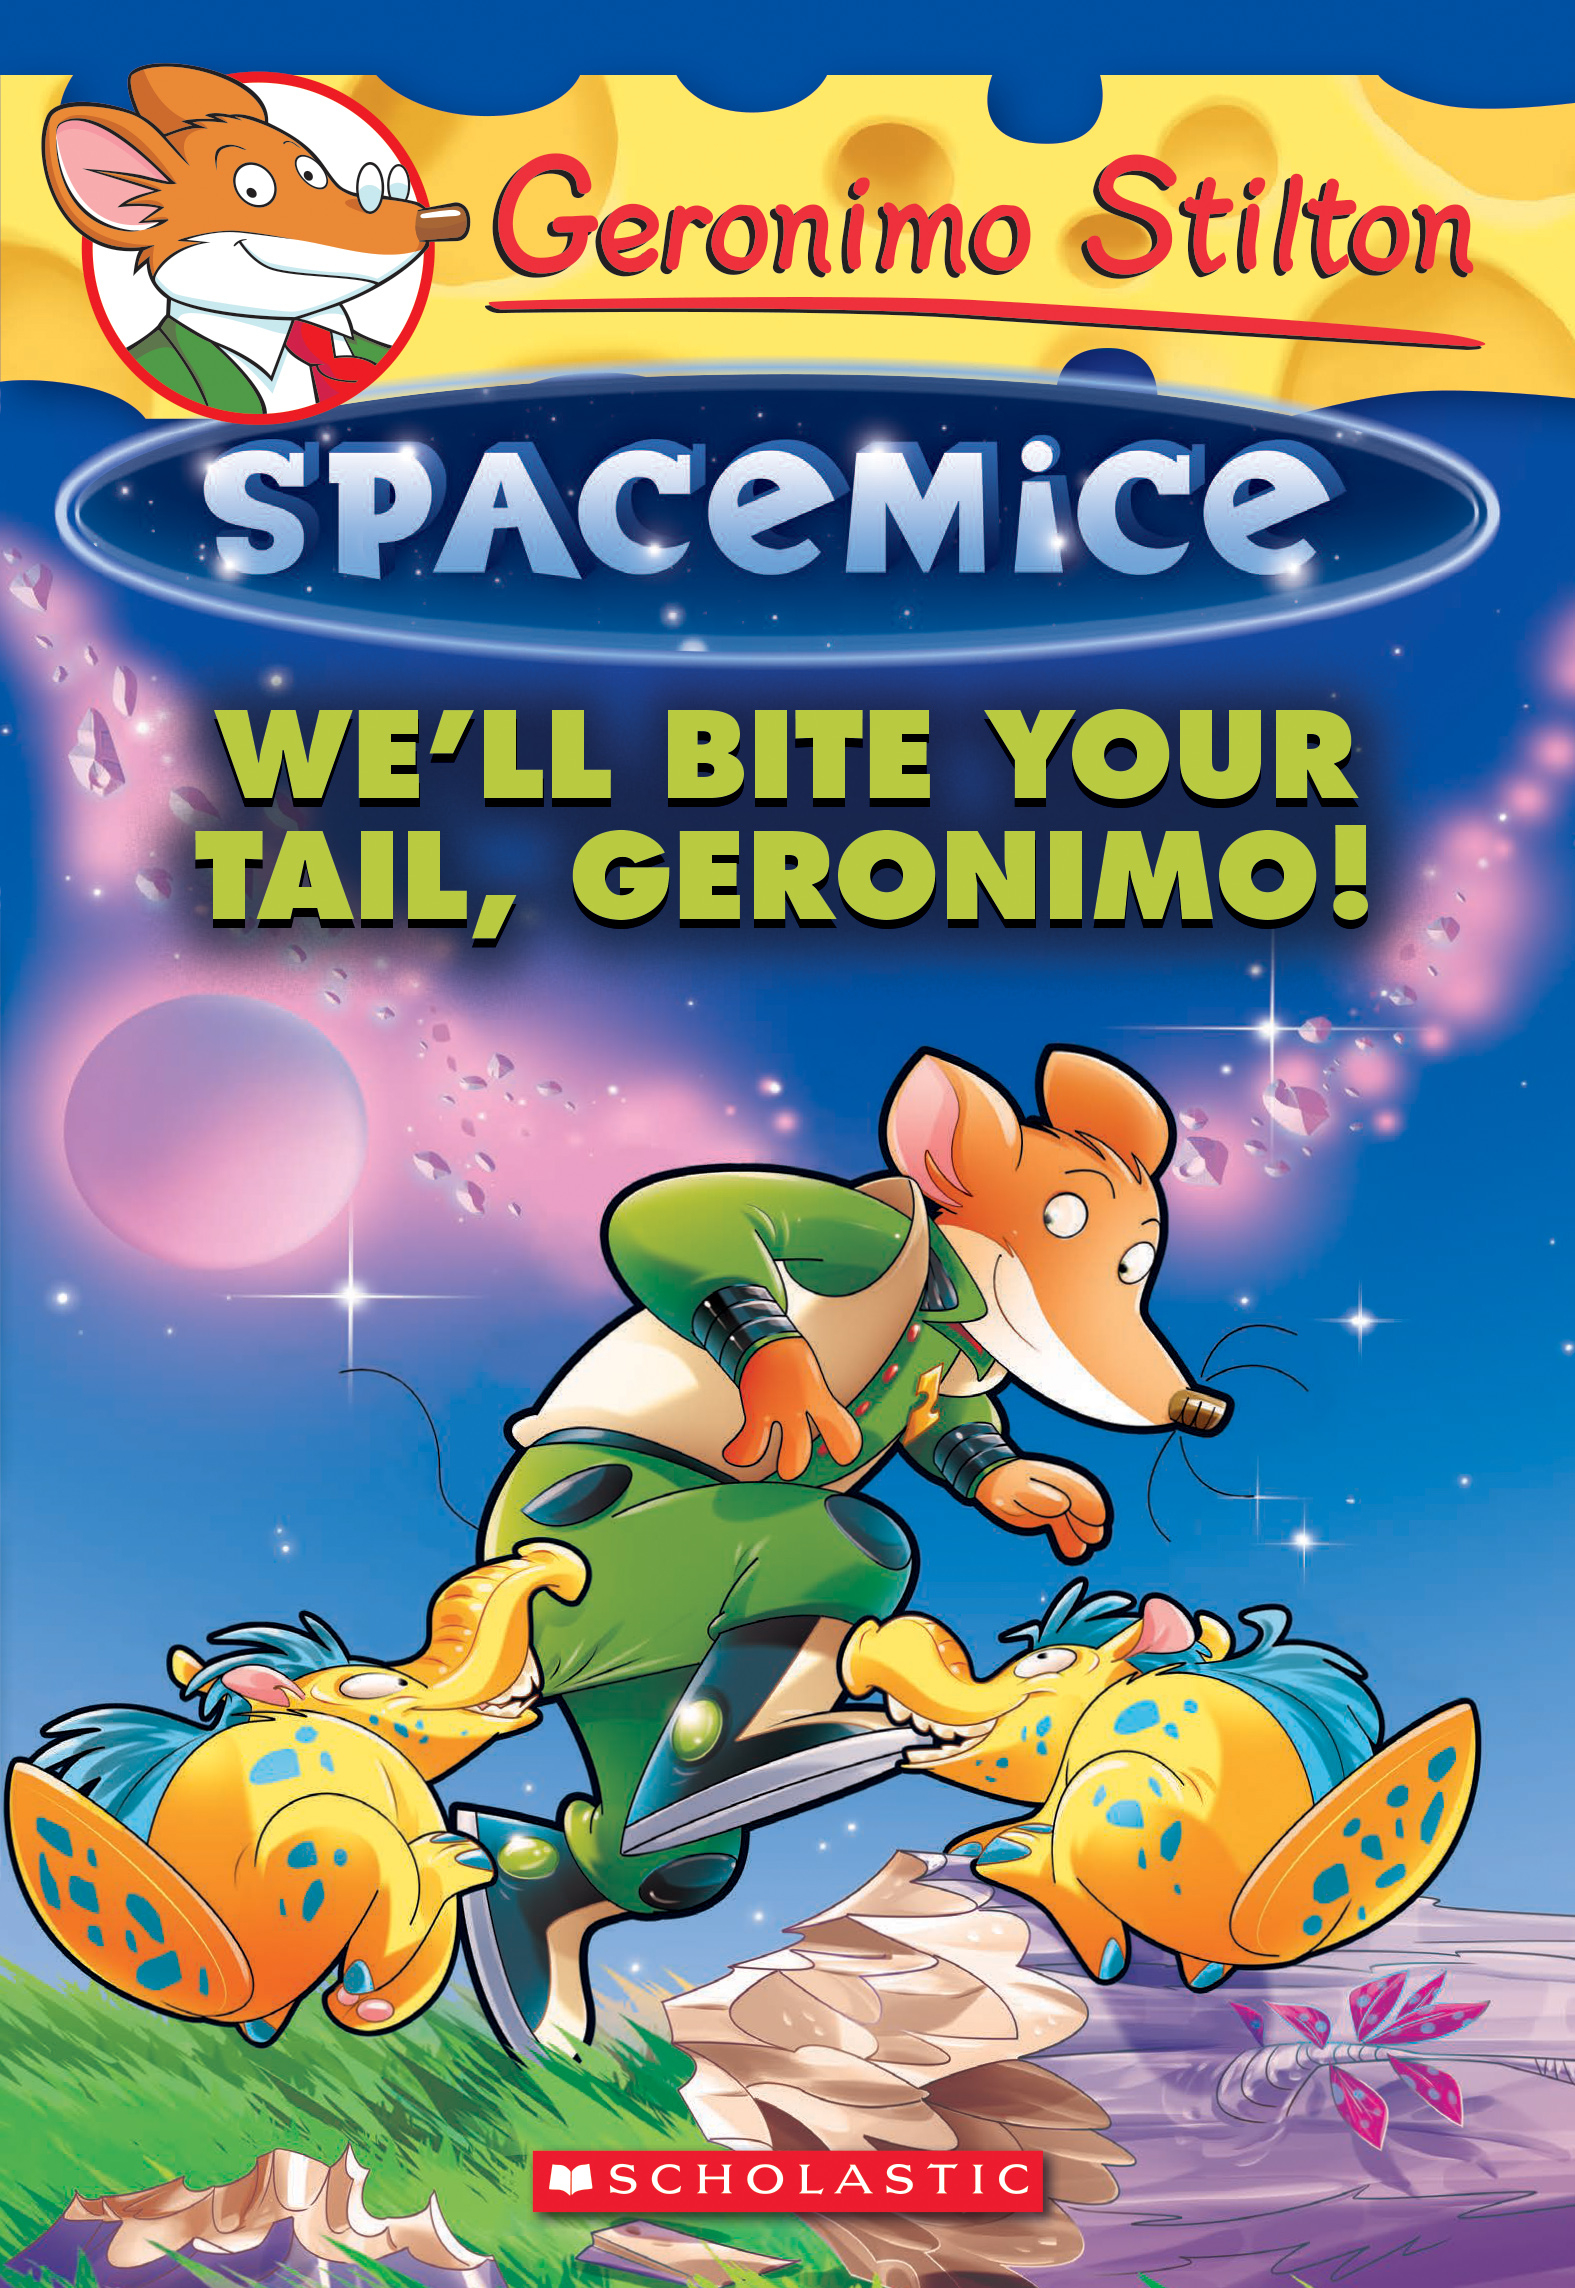 We'Ll Bite Your Tail, Geronimo! (Geronimo Stilton Spacemice #11 concernant Gerimo Stilton